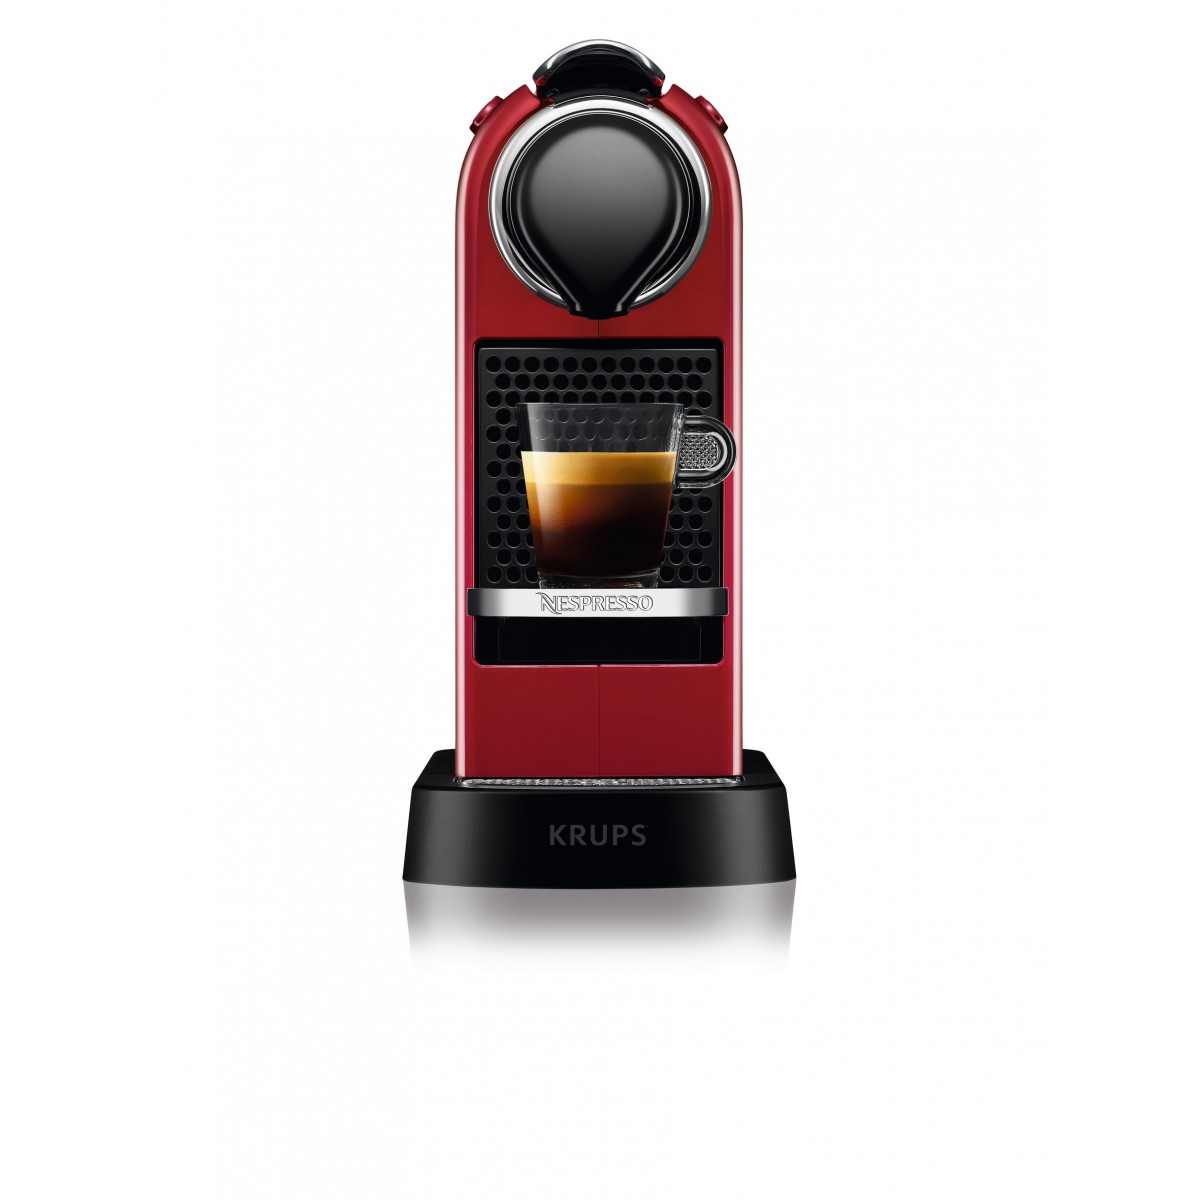 Krups Nespresso XN7415. Bauform: Arbeitsfläche, Produkttyp: Espressomaschine, Kaffee-Einfüllart: Kaffeekapsel, Kapazität (in Tas